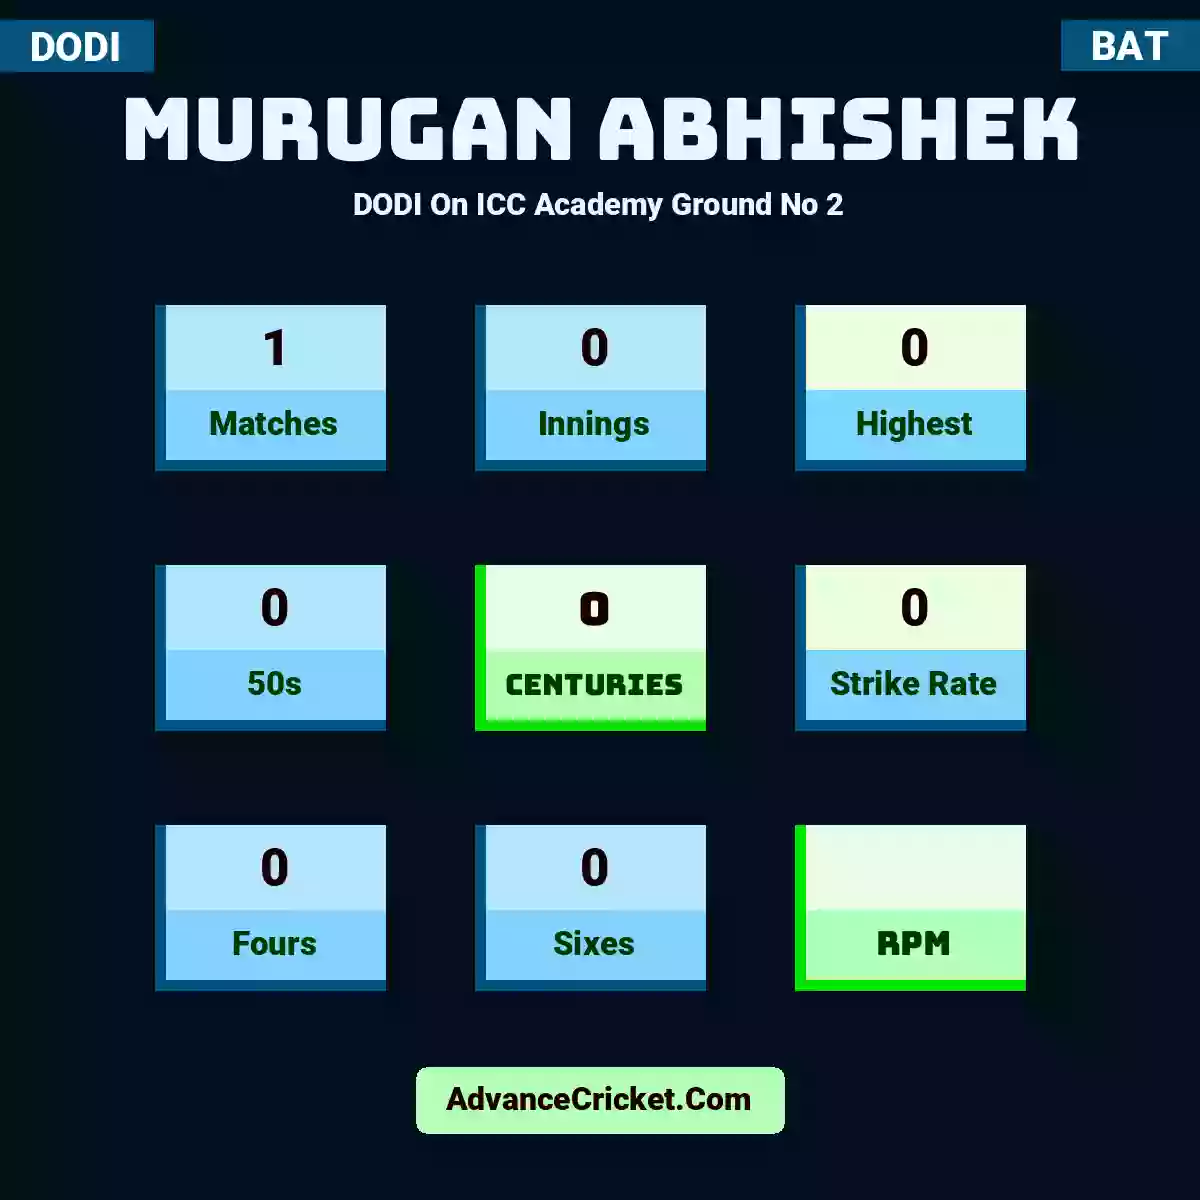 Murugan Abhishek DODI  On ICC Academy Ground No 2, Murugan Abhishek played 1 matches, scored 0 runs as highest, 0 half-centuries, and 0 centuries, with a strike rate of 0. M.Abhishek hit 0 fours and 0 sixes.